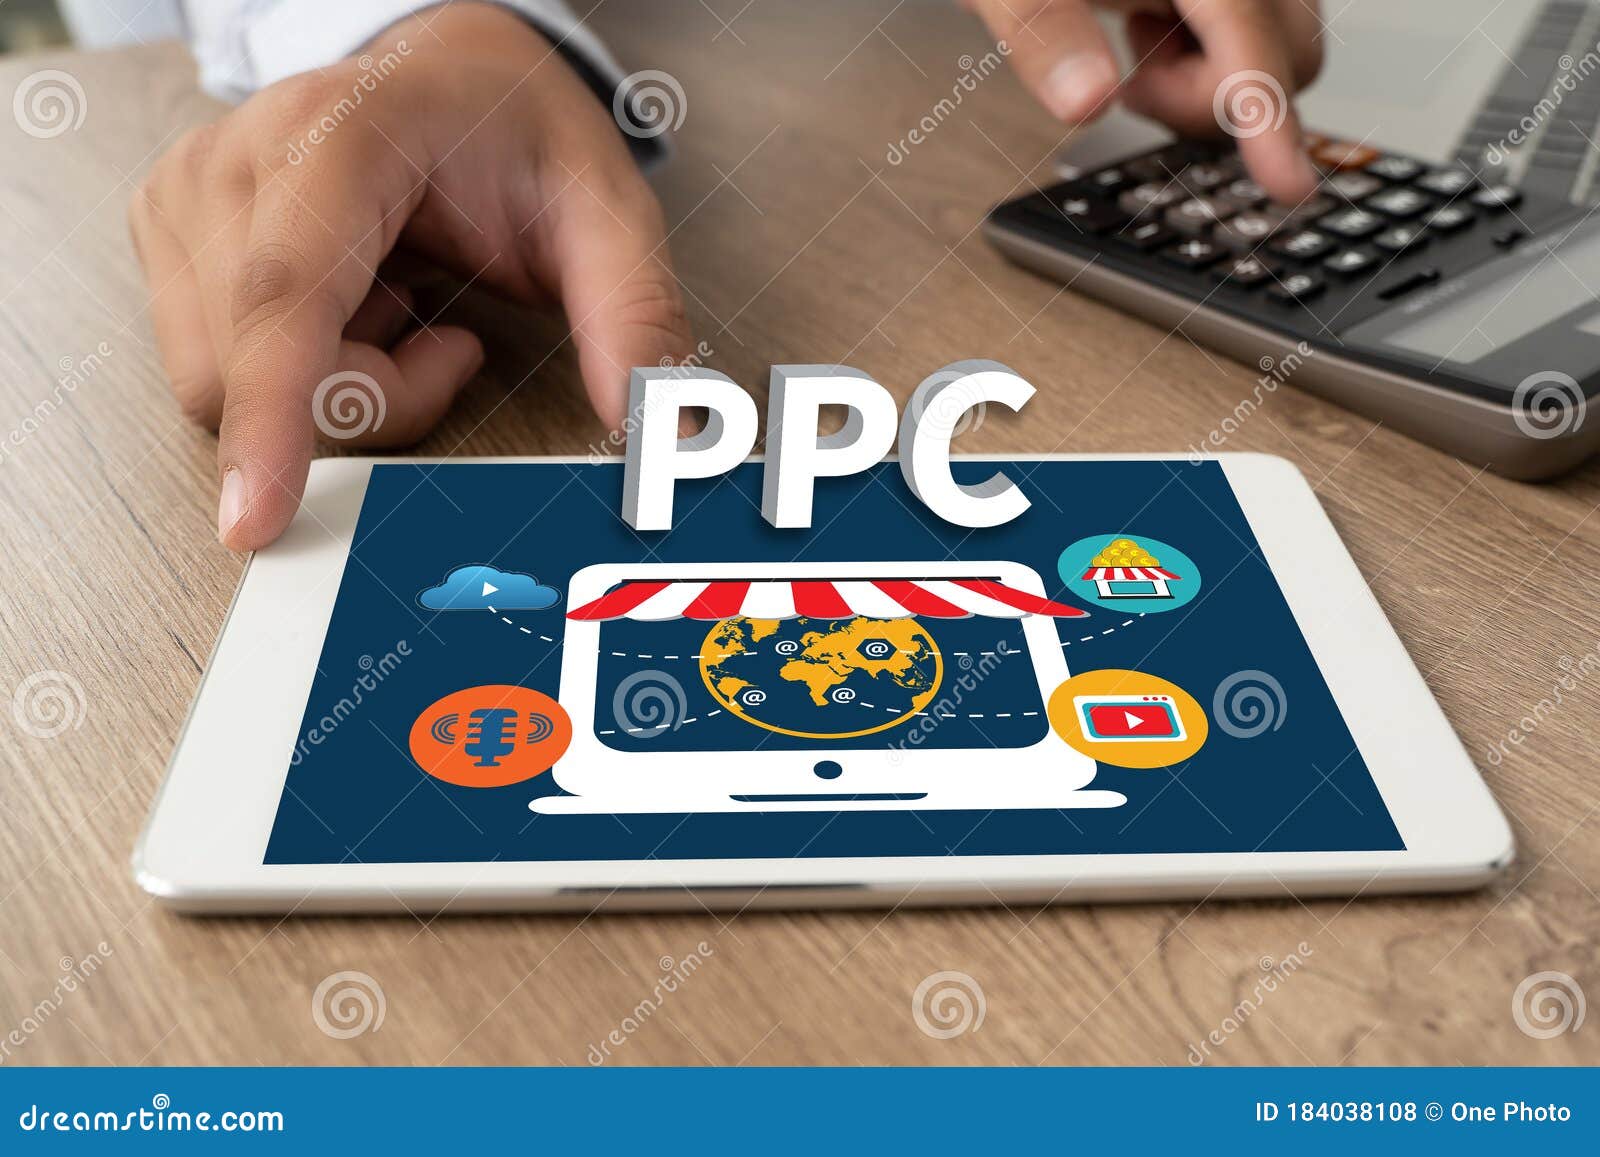 ppc - pay per click concept businessman working concept